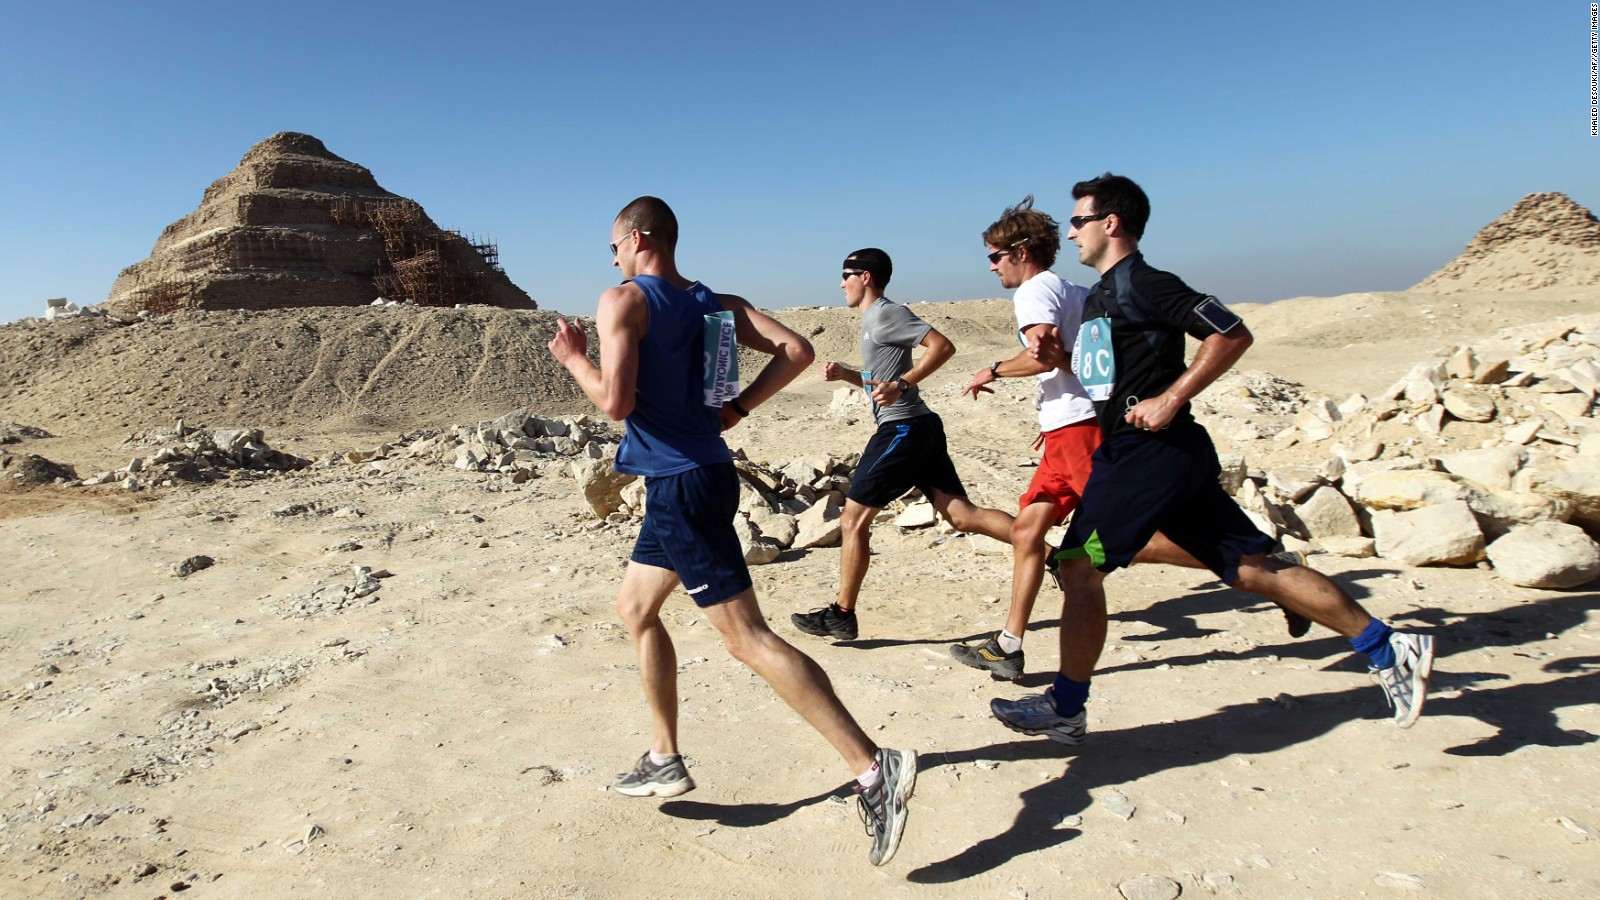 How one Dubai running club sparked a fitness craze - CNN